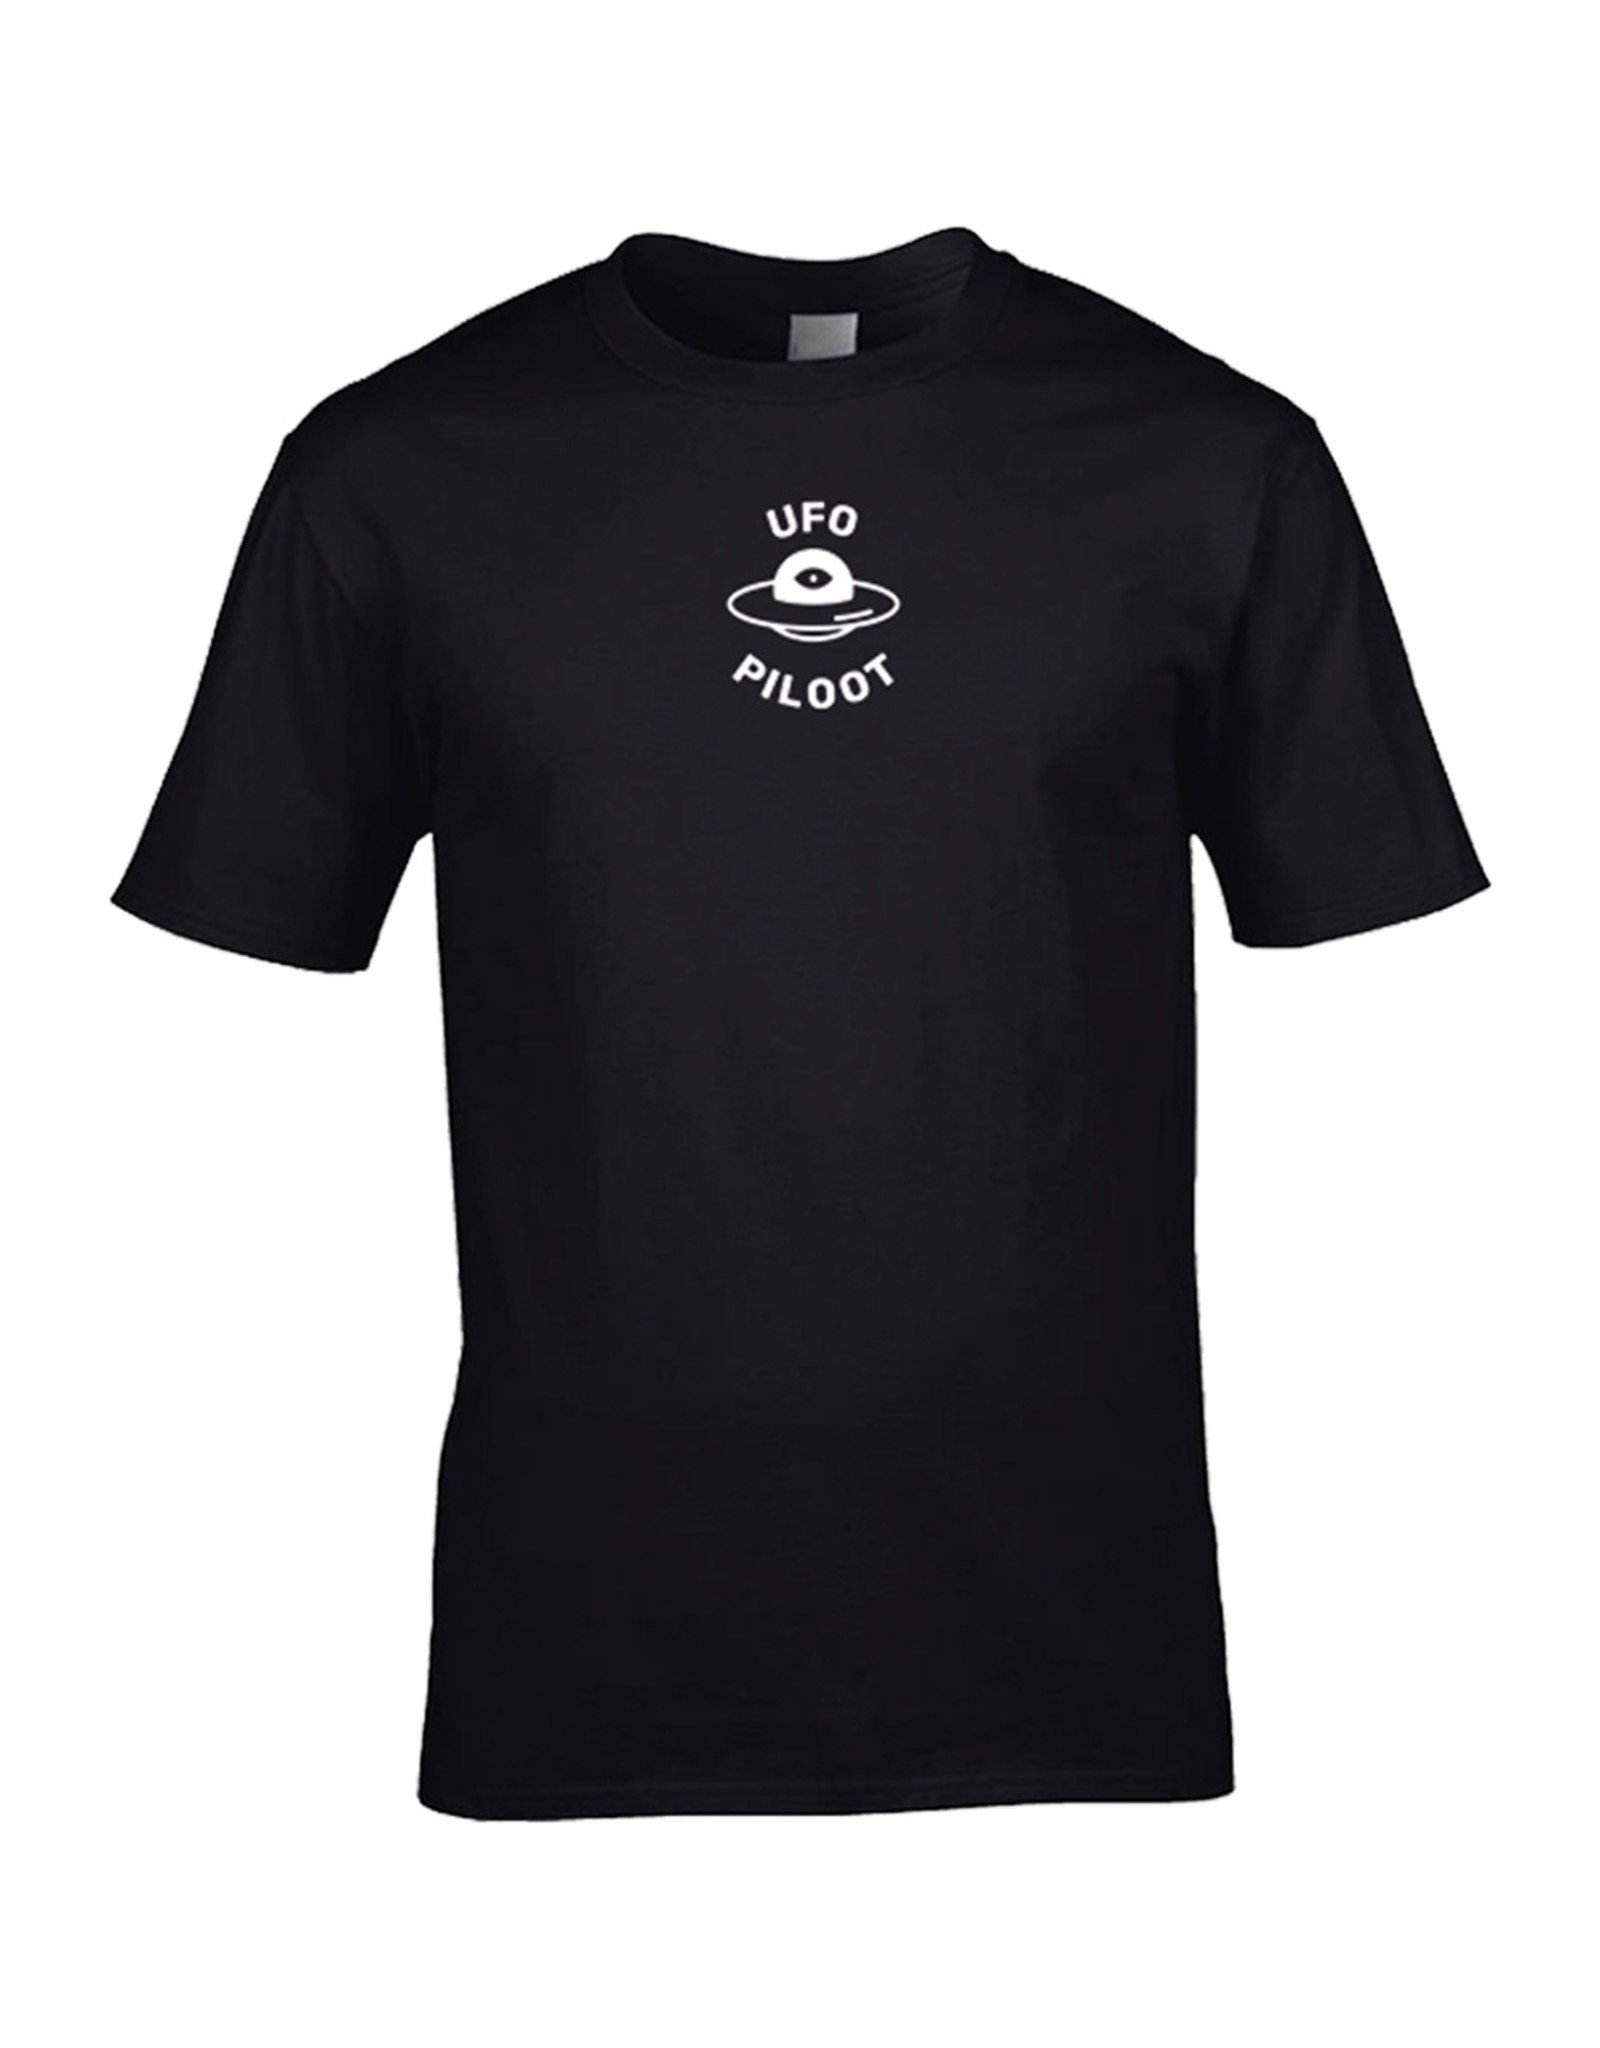 Festicap T-Shirt UFO Piloot | Soft Cotton | Handmade by us